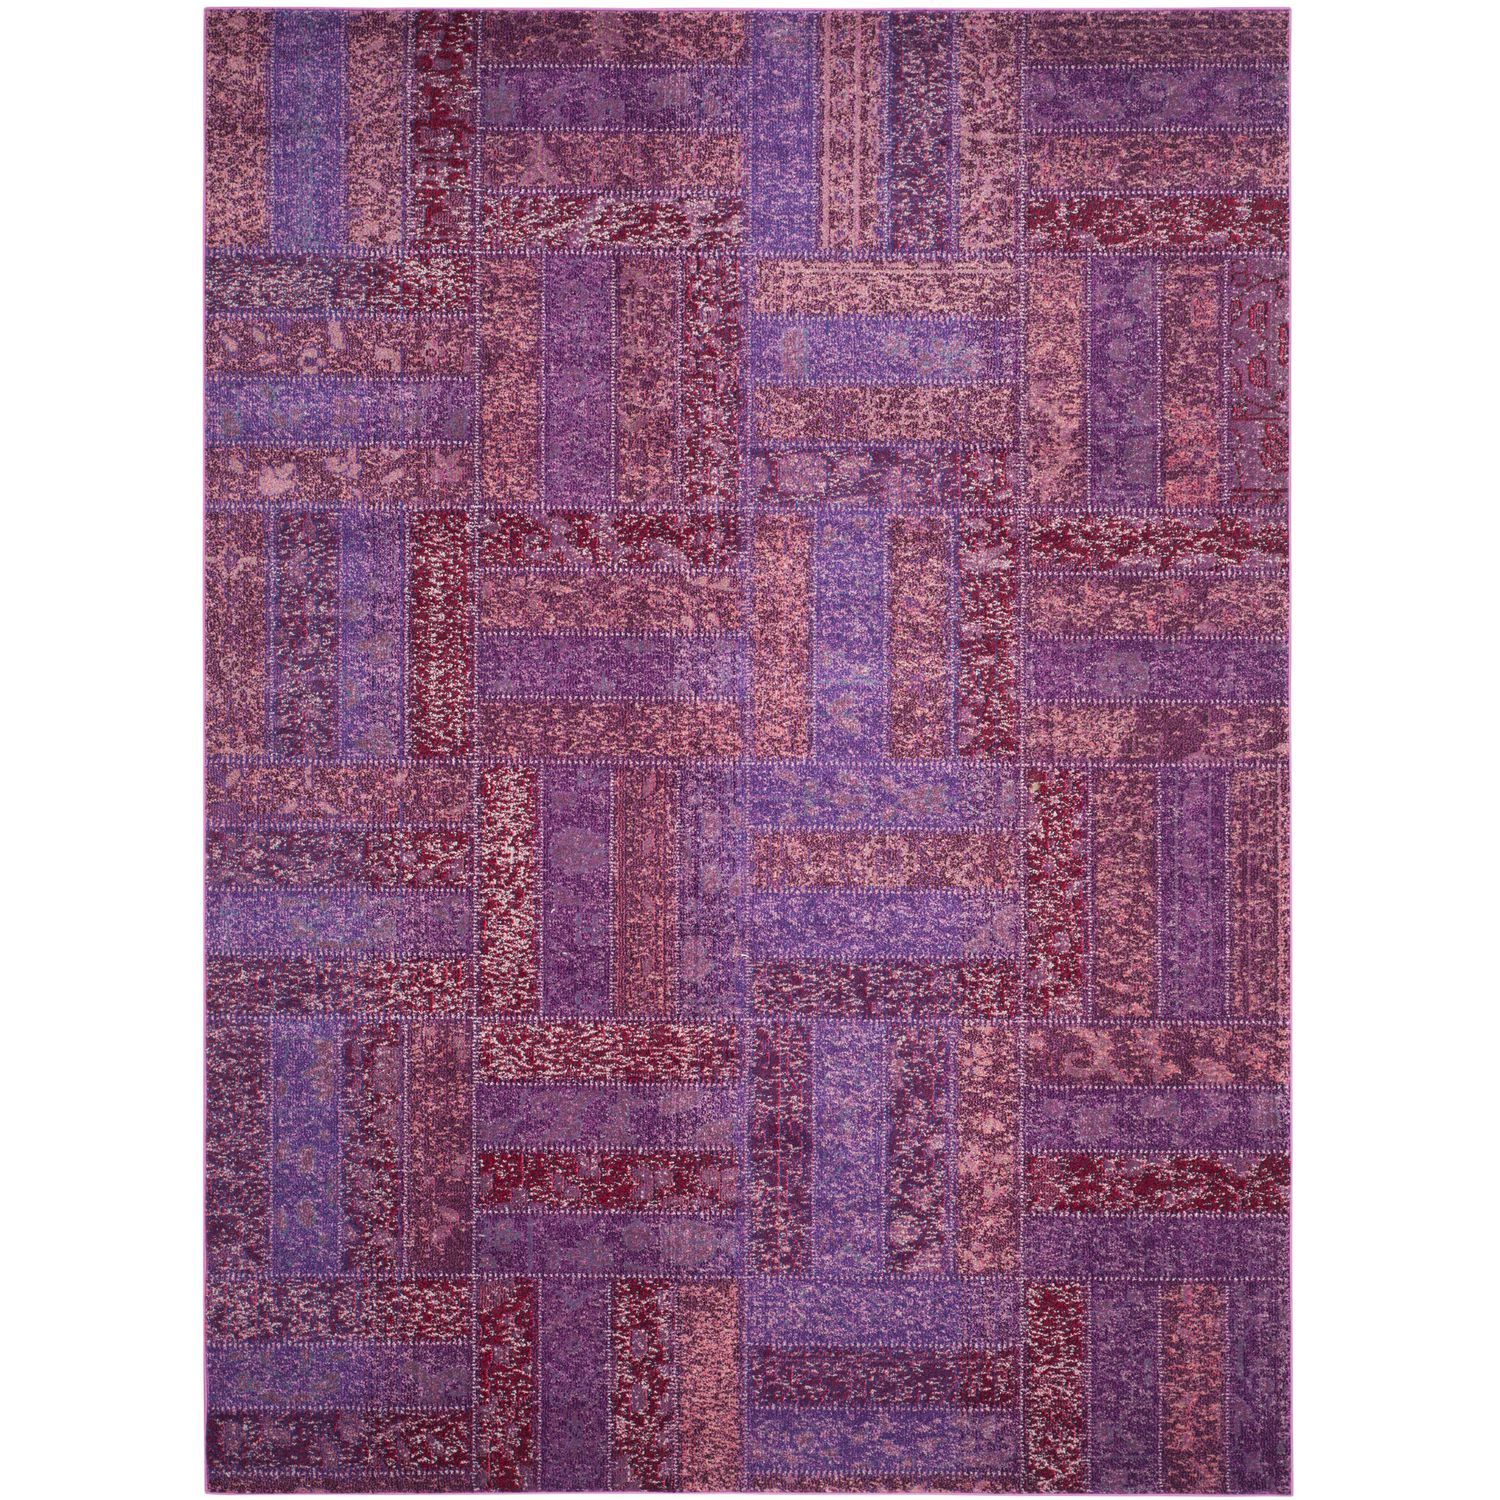 Teppich Cordova - Kunstfaser - Dunkellila / Bordeaux - 200 x 279 cm, Safavieh